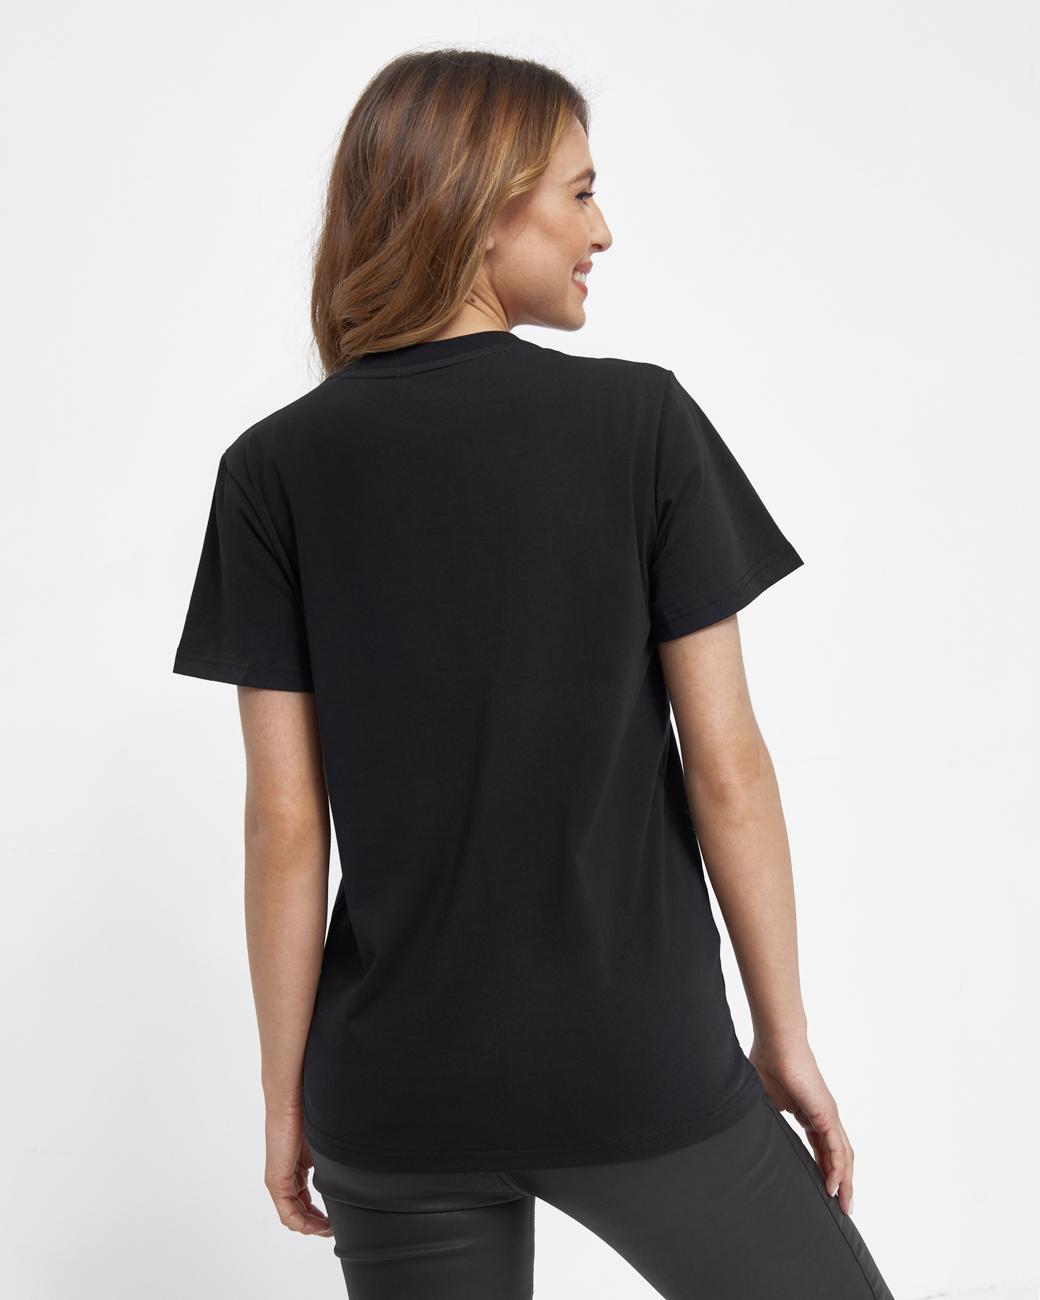 T-shirt SOFTFLIX black XL